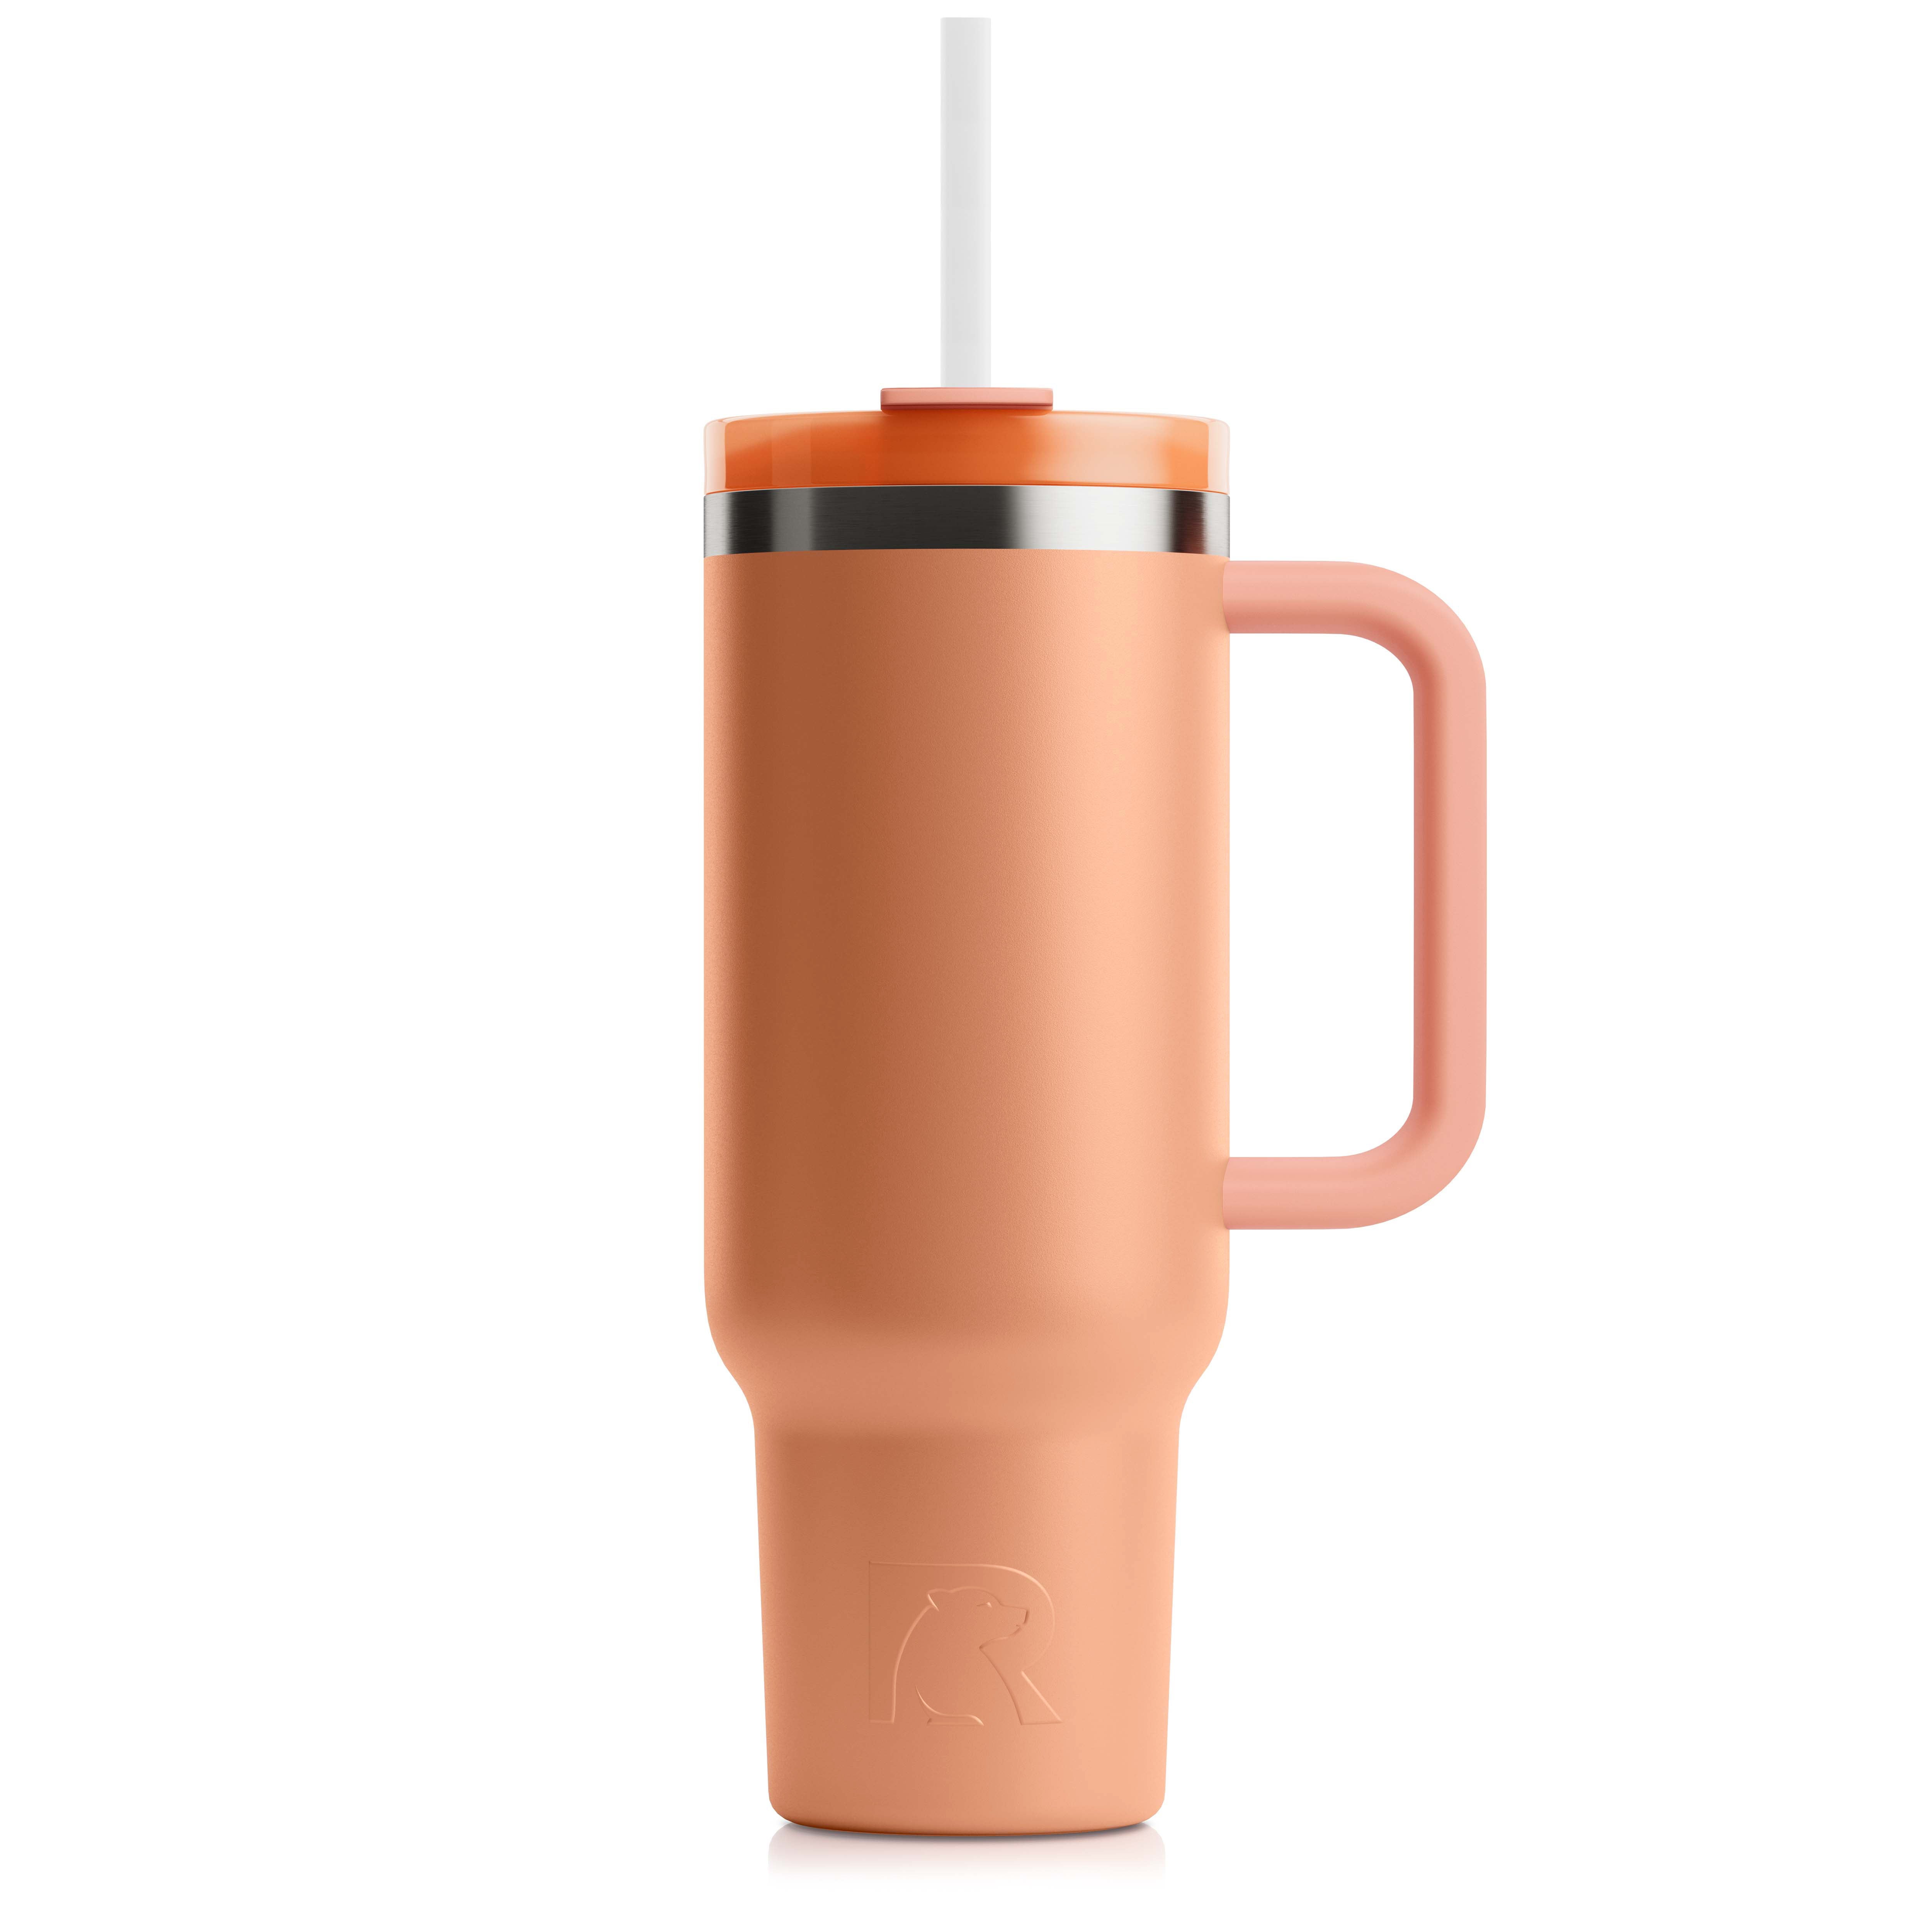 40 oz Insulated Mug 2.0 with Handle and Straw Lid Stainless Steel Insulated  Mug Travel Mug Hot and Cold Drinking Travel Coffee Mugs